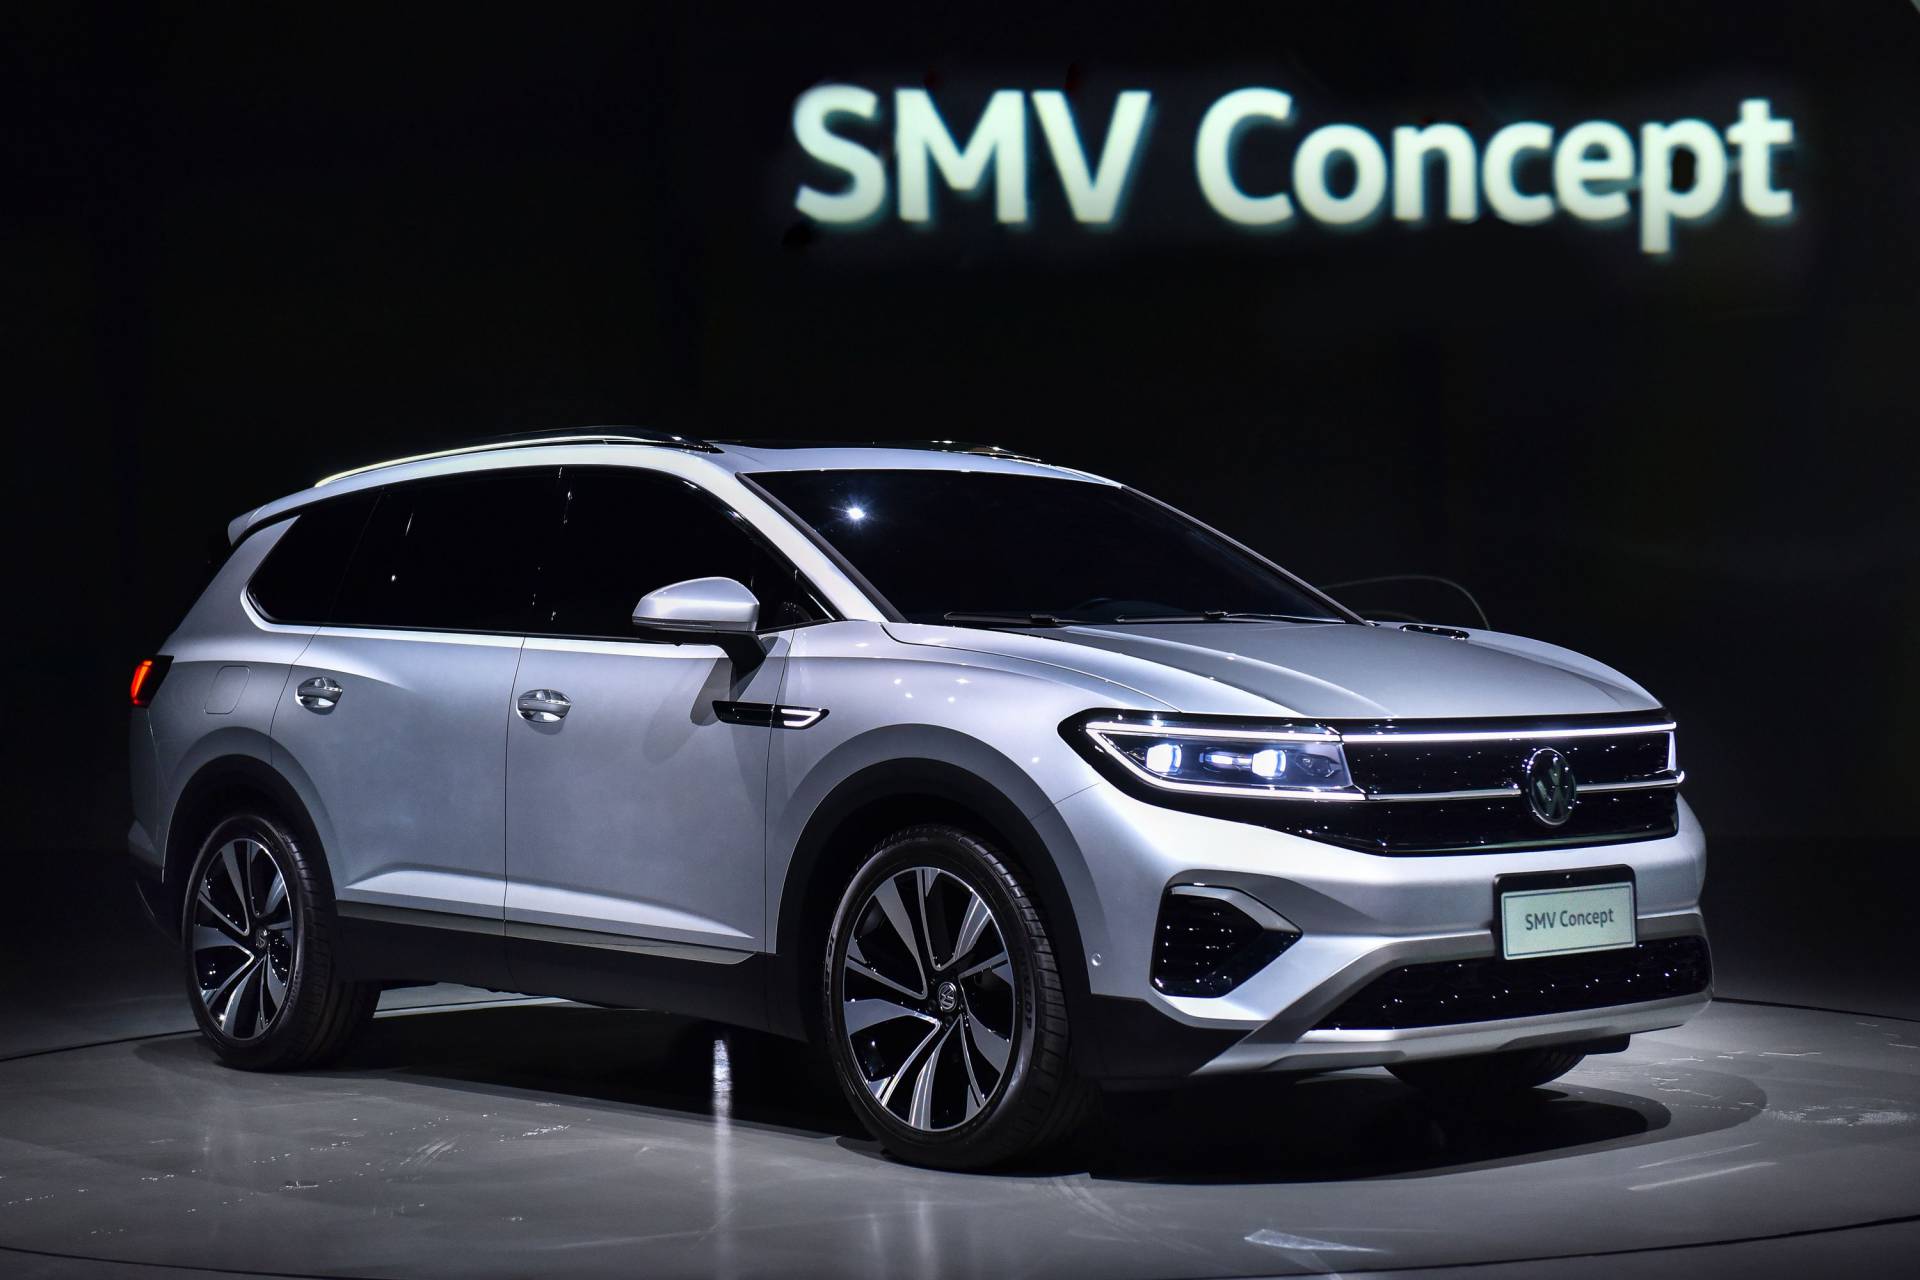 VW SMV Concept